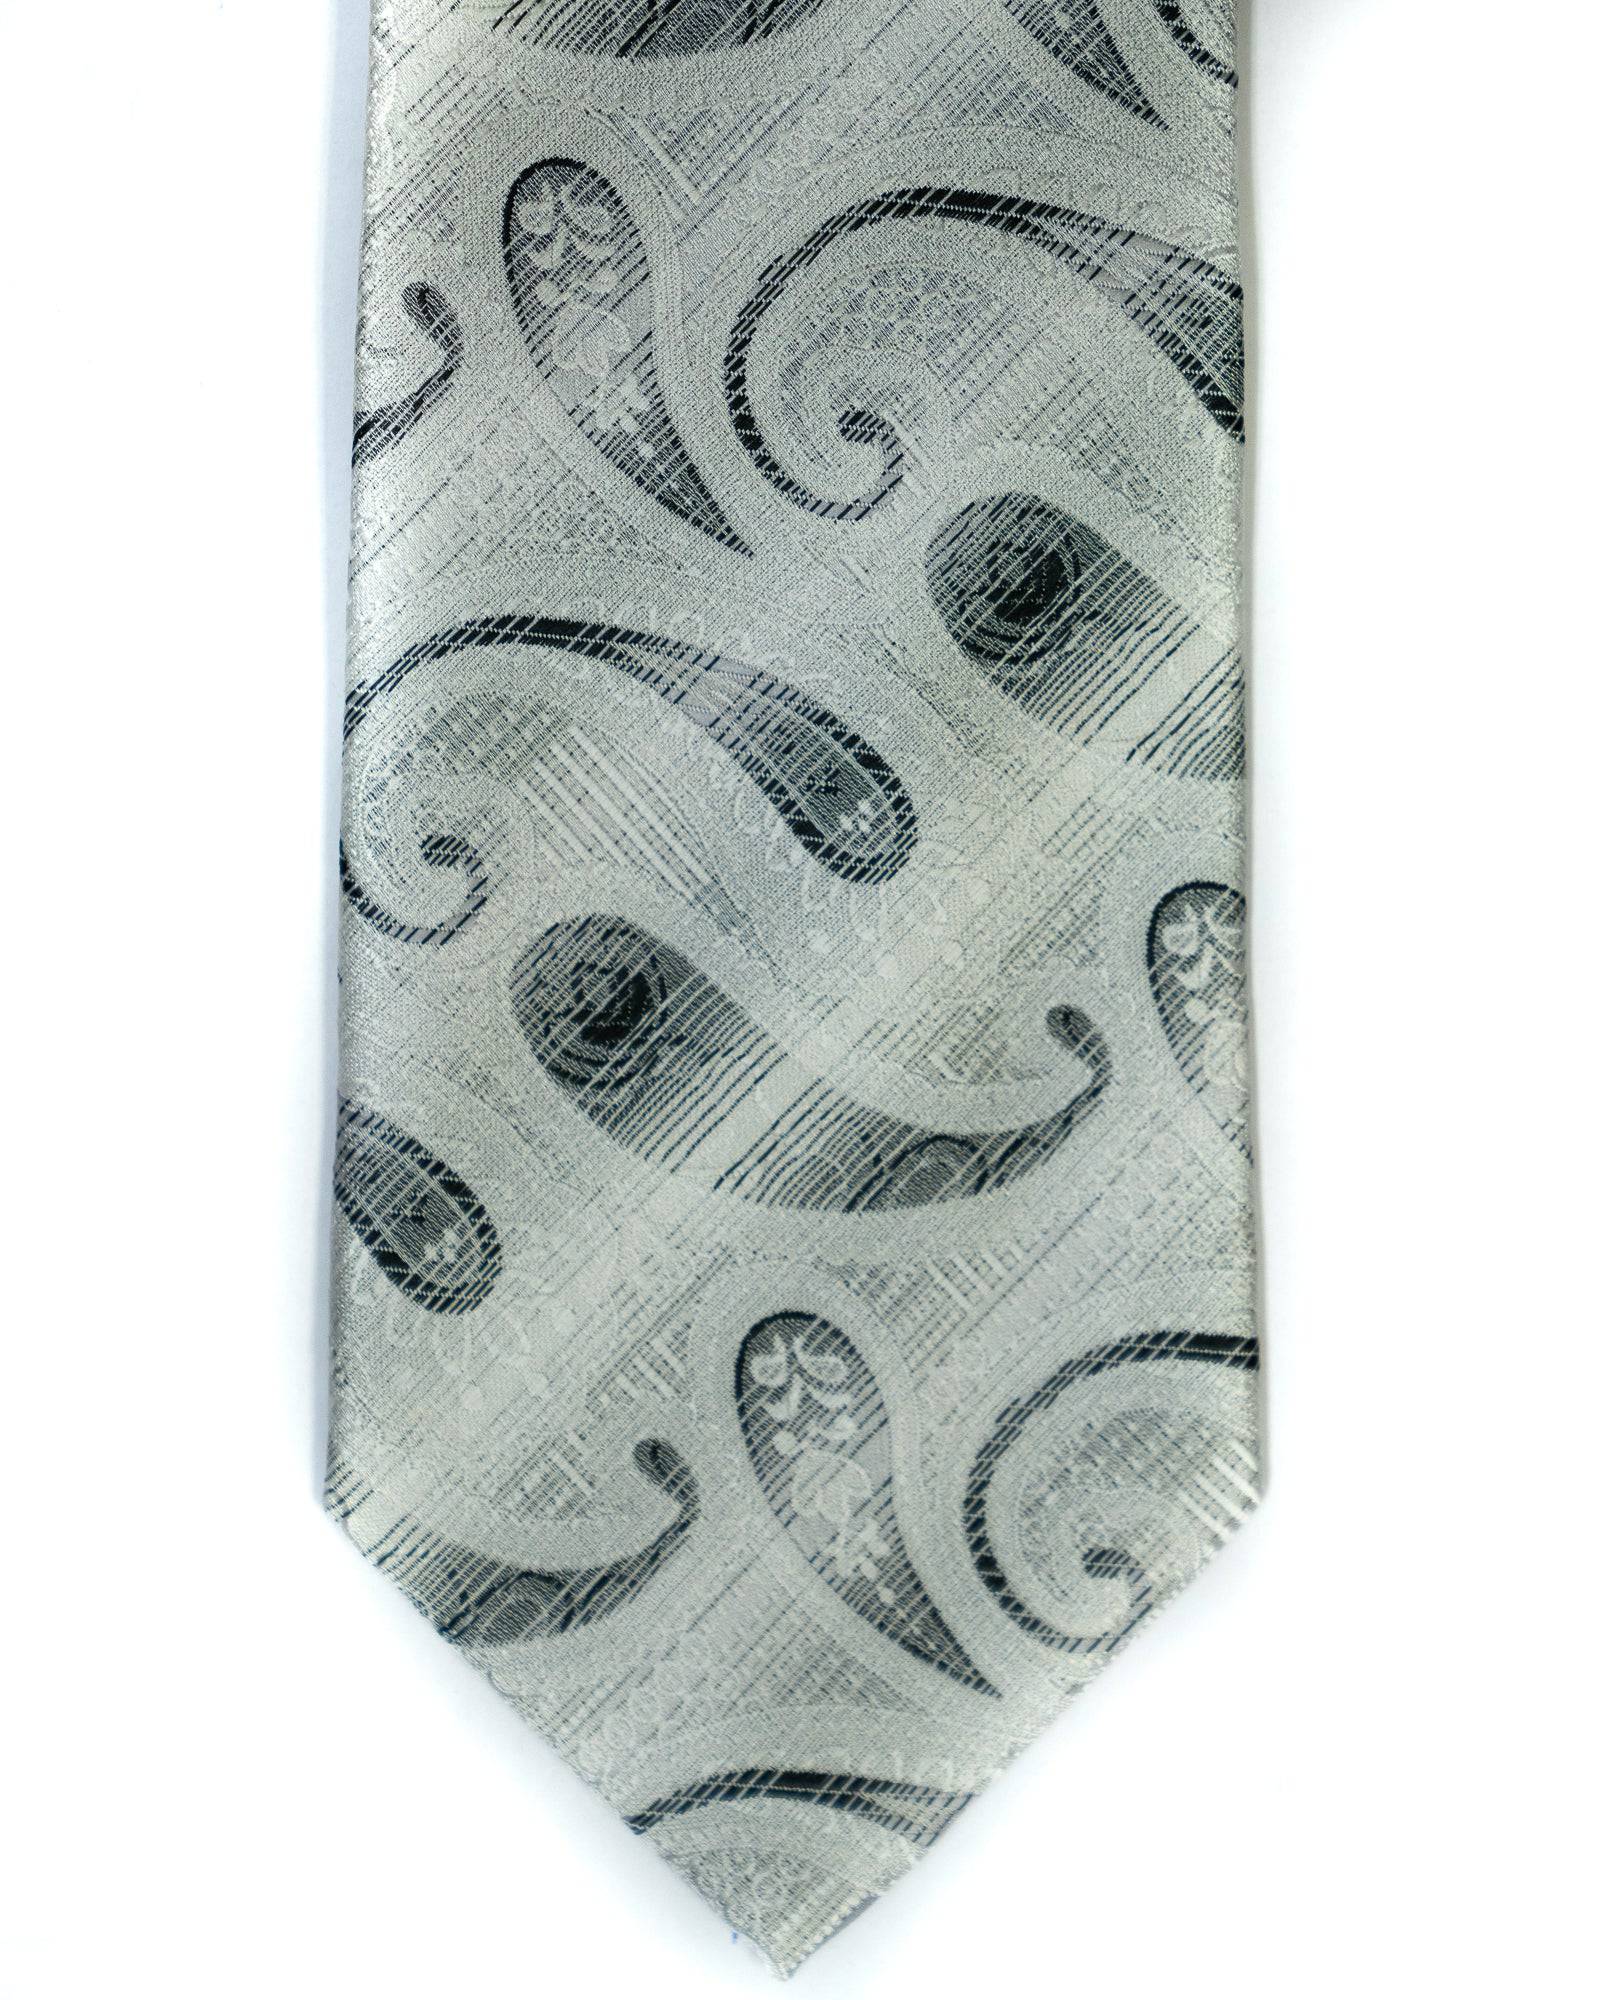 Venturi Uomo Paisley Tie in Silver with Black - Rainwater's Men's Clothing and Tuxedo Rental